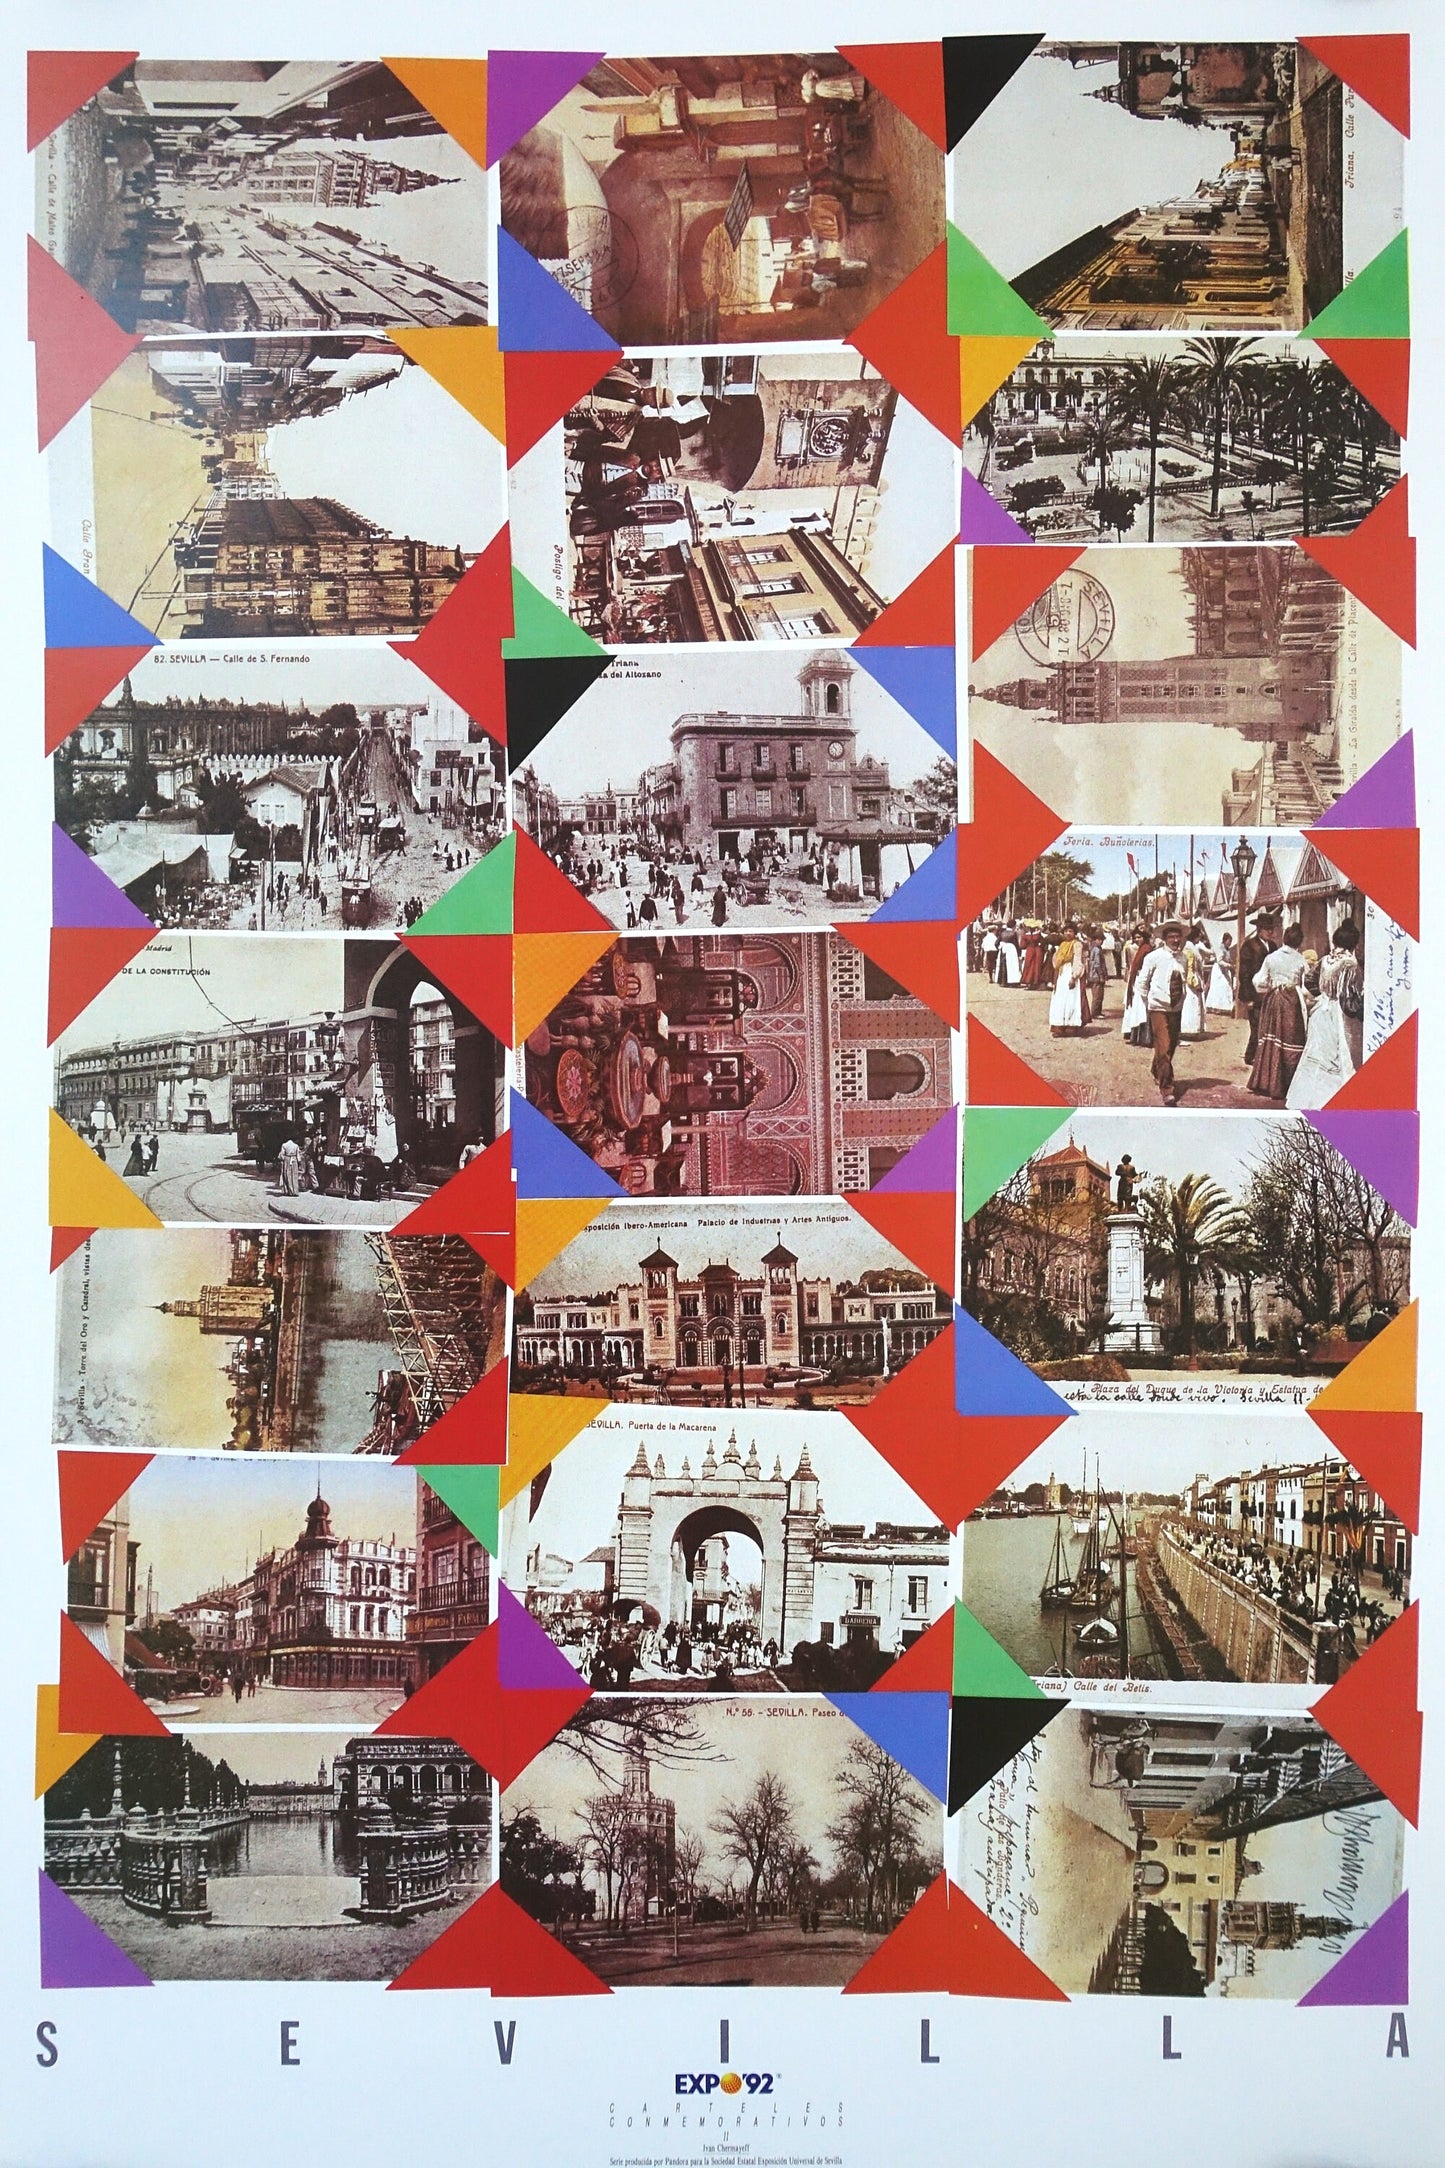 1992 Sevilla Expo by Ivan Chermayeff - Original Vintage Poster